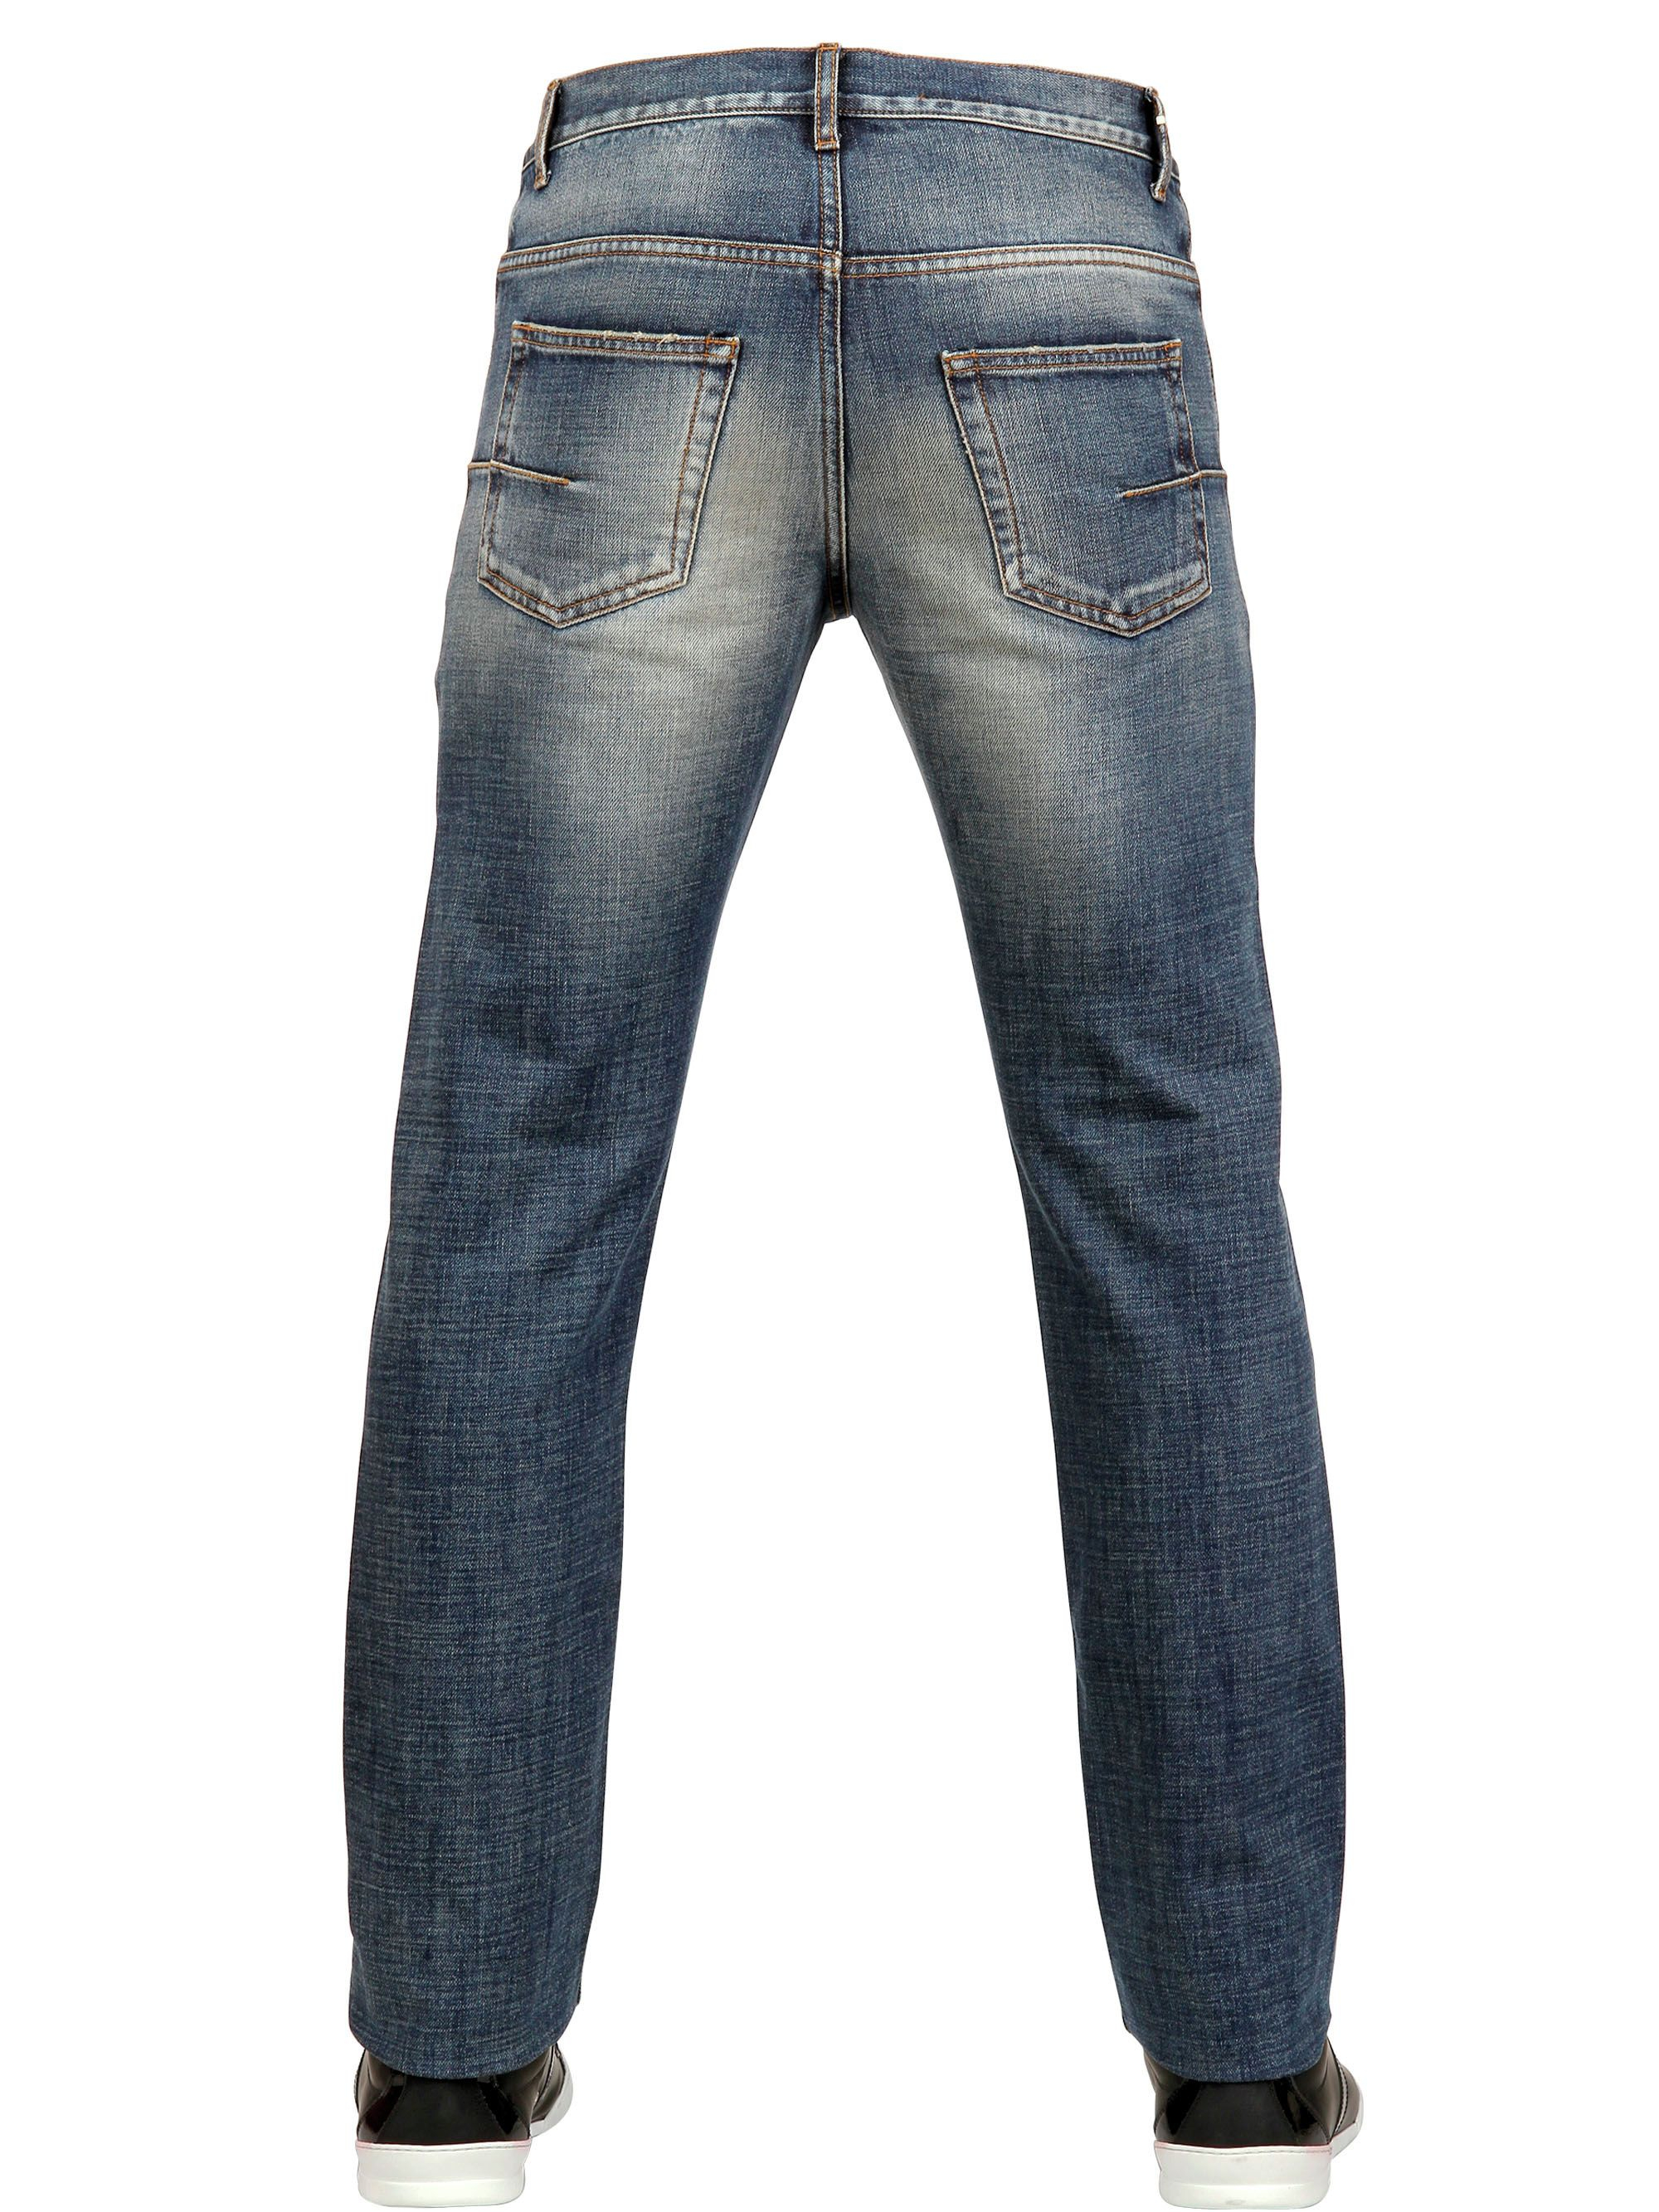 Lyst - Dior Homme 19Cm Heavy Seas Denim Jeans in Blue for Men